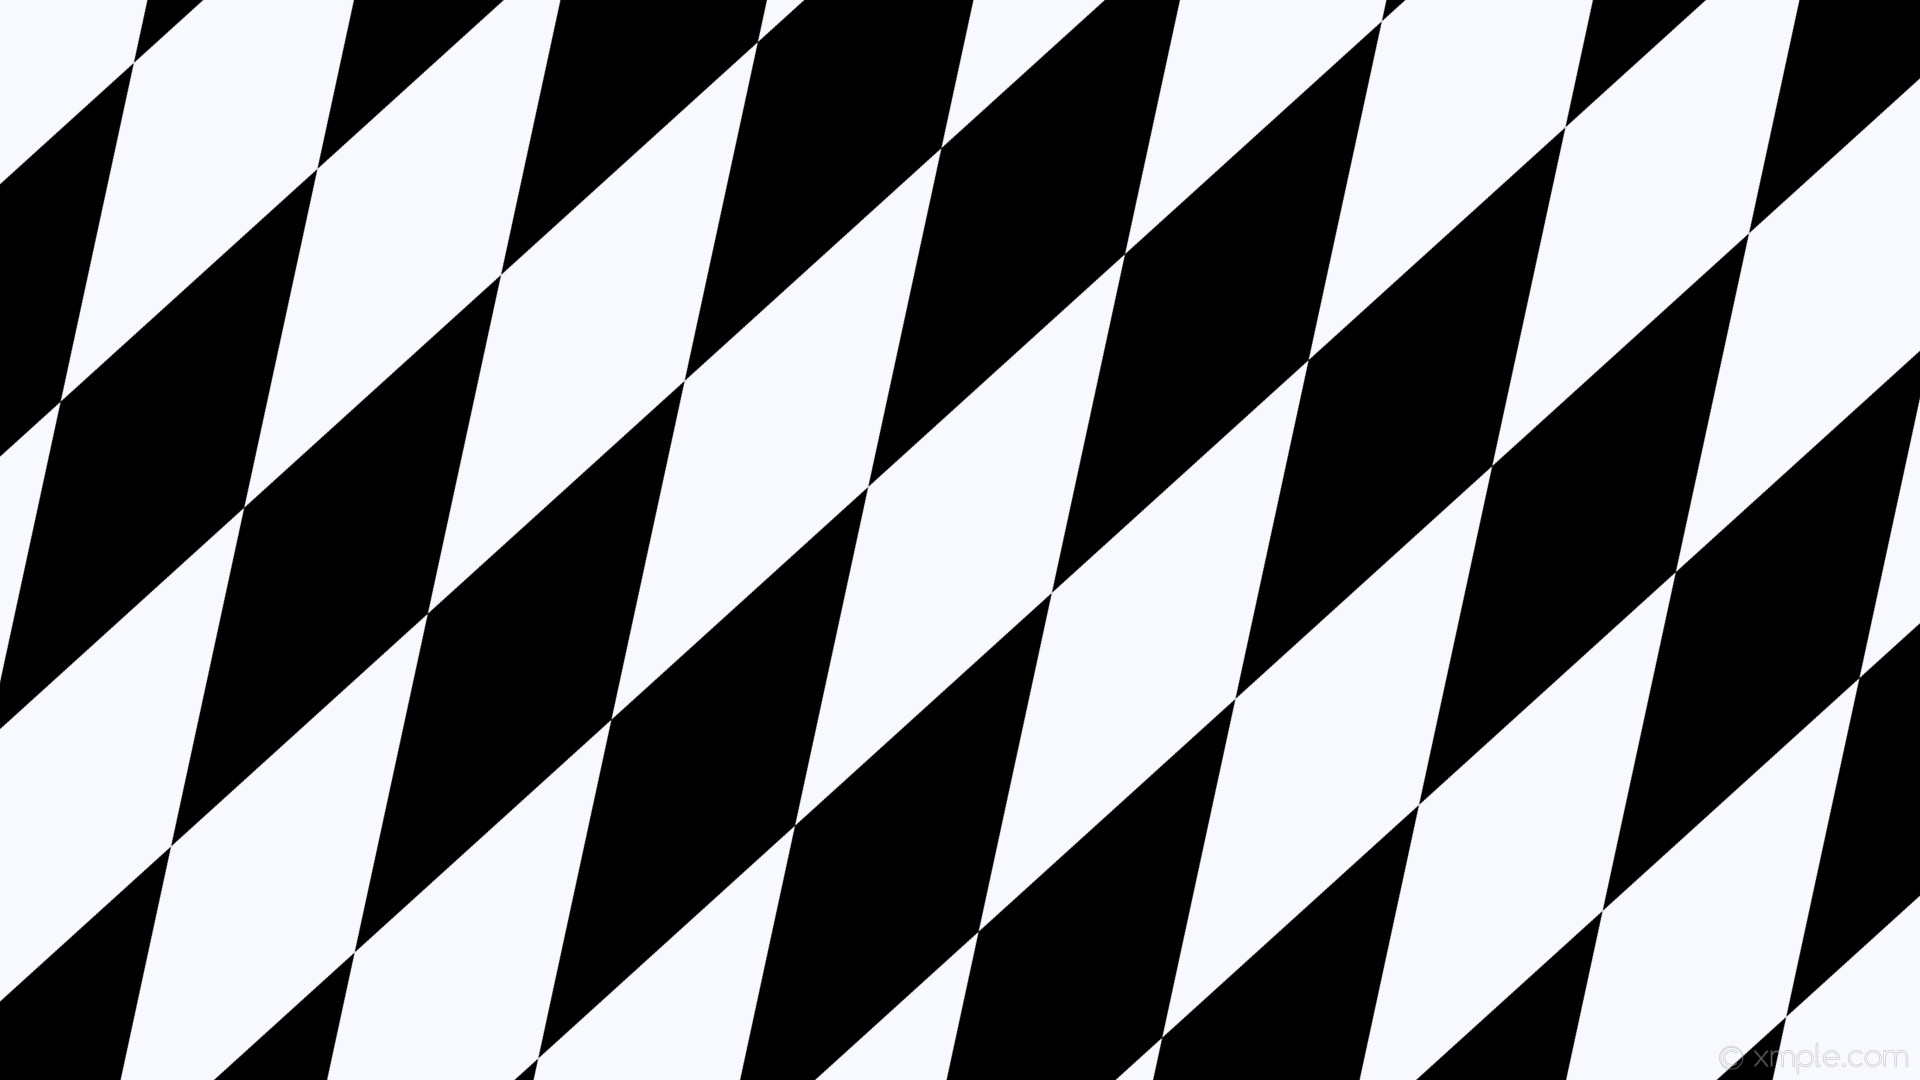 1920x1080 wallpaper white diamond rhombus black lozenge ghost white #f8f8ff #000000  60Â° 660px 212px